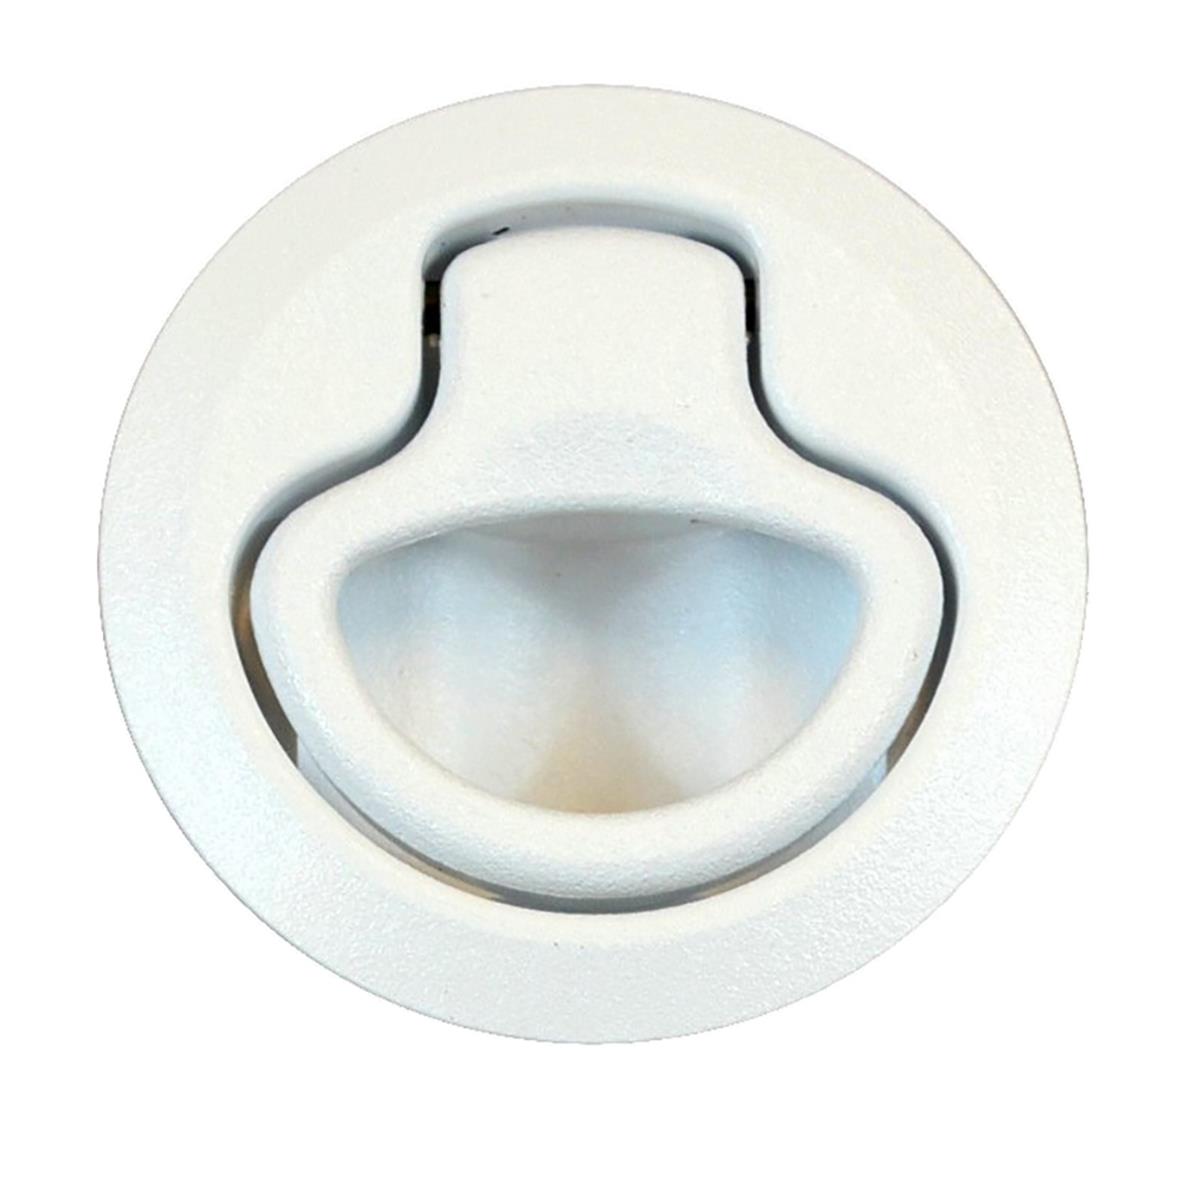 M1-63-1 Flush Pull Latch Pull To Open Non Locking Plastic - White